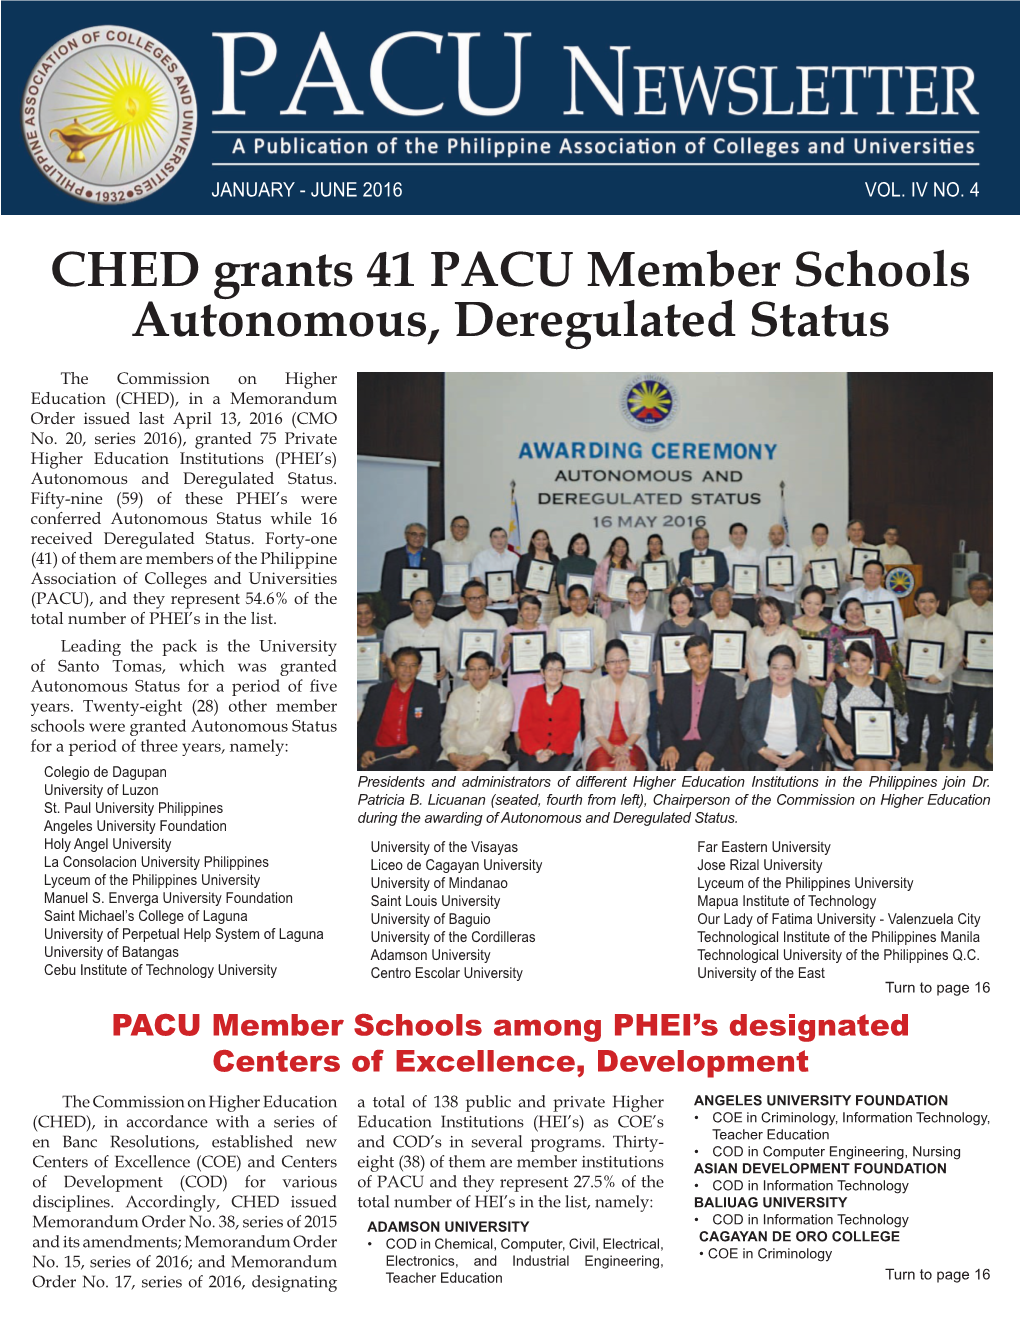 CHED Grants 41 PACU Member Schools Autonomous, Deregulated Status